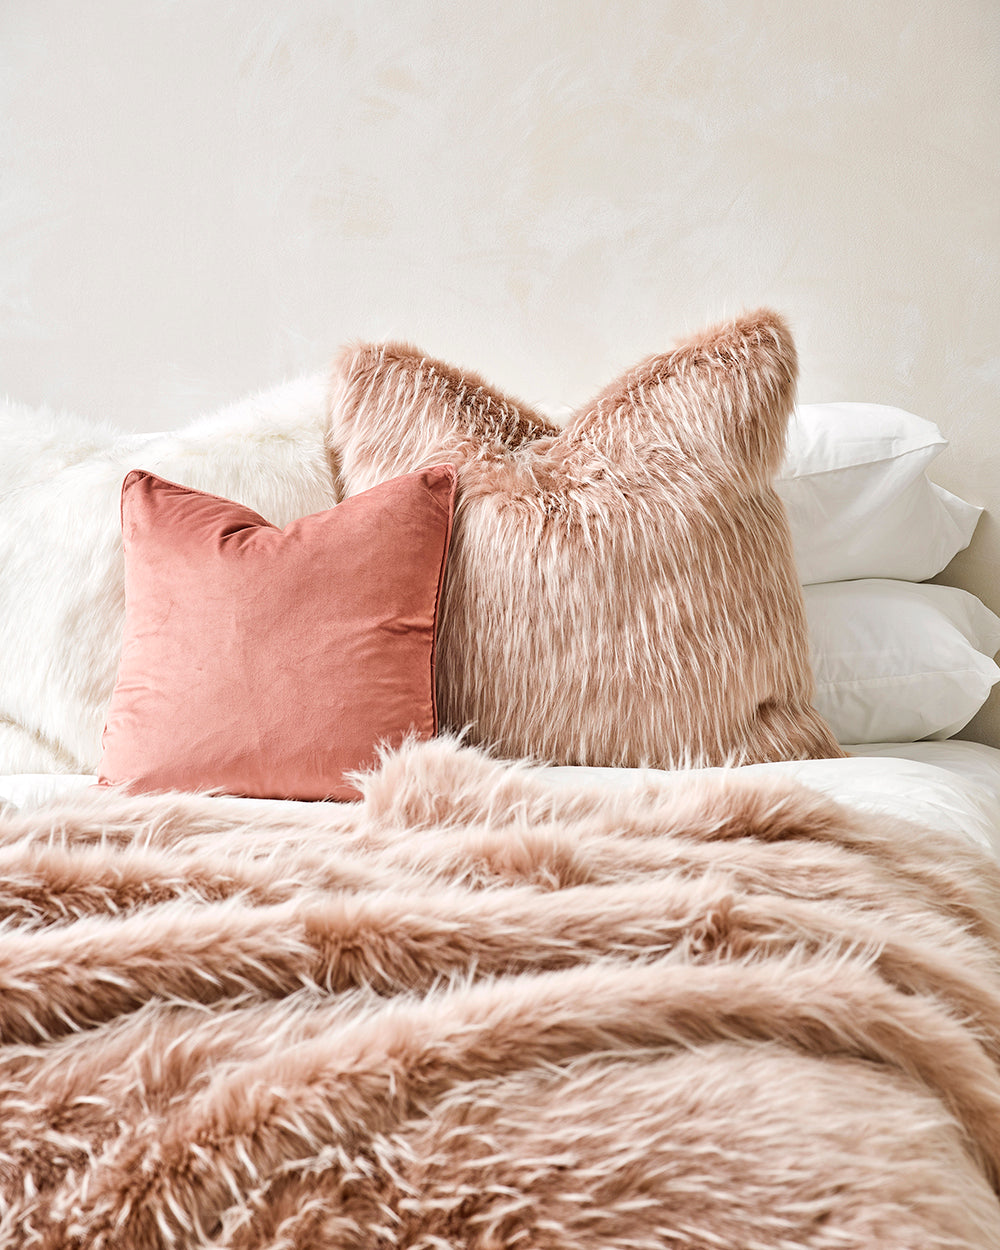 Luxury Imitation Fur Cushion - Pink Peony Plume